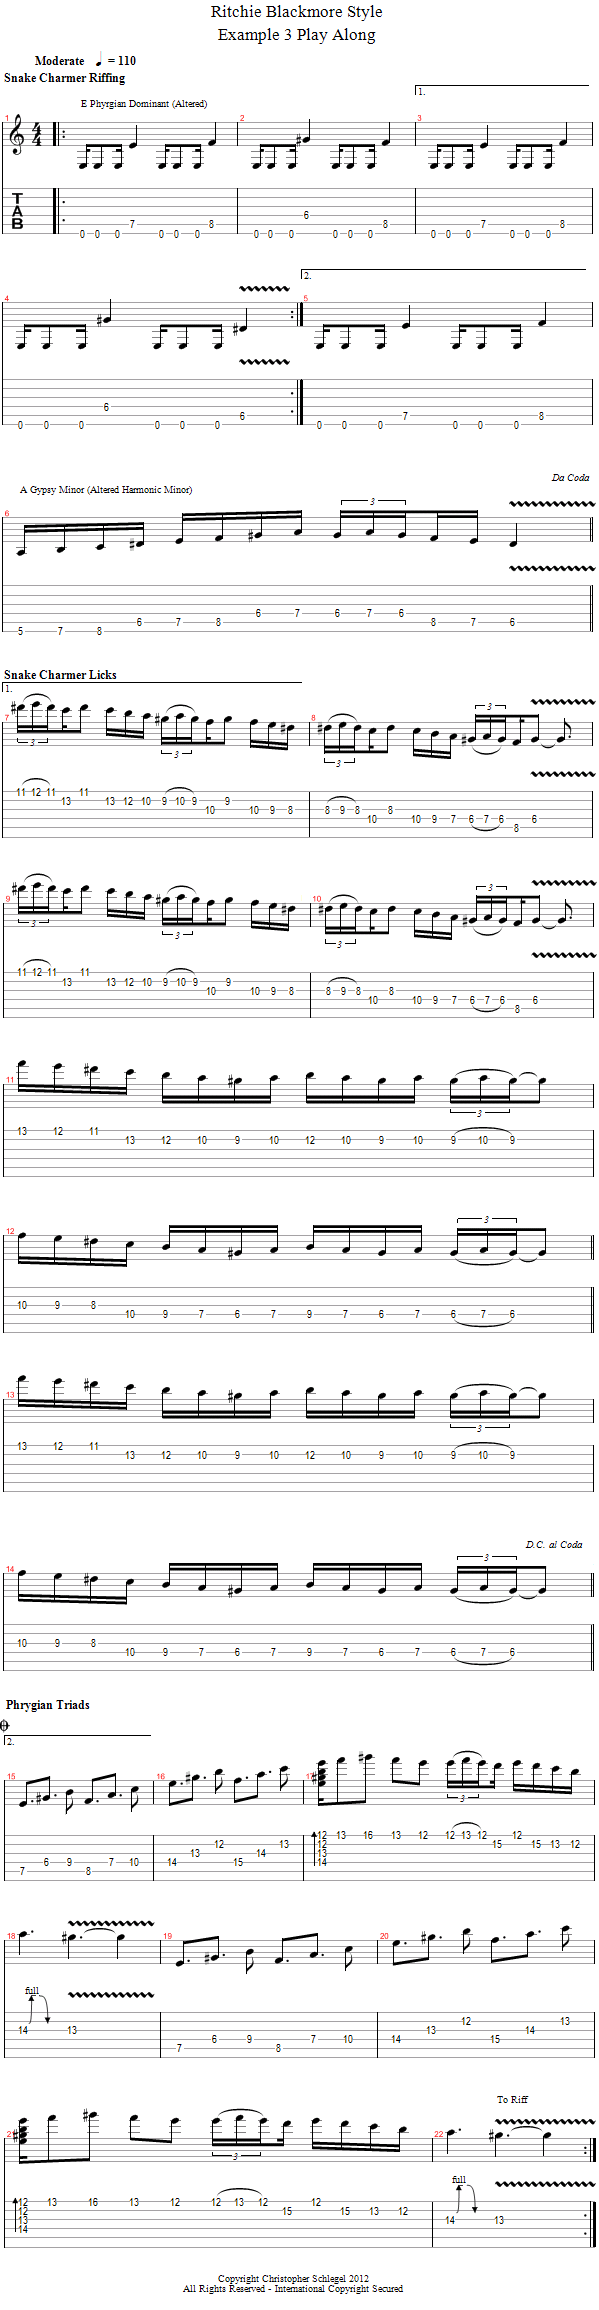 Preparing to Play Along Example 3 song notation